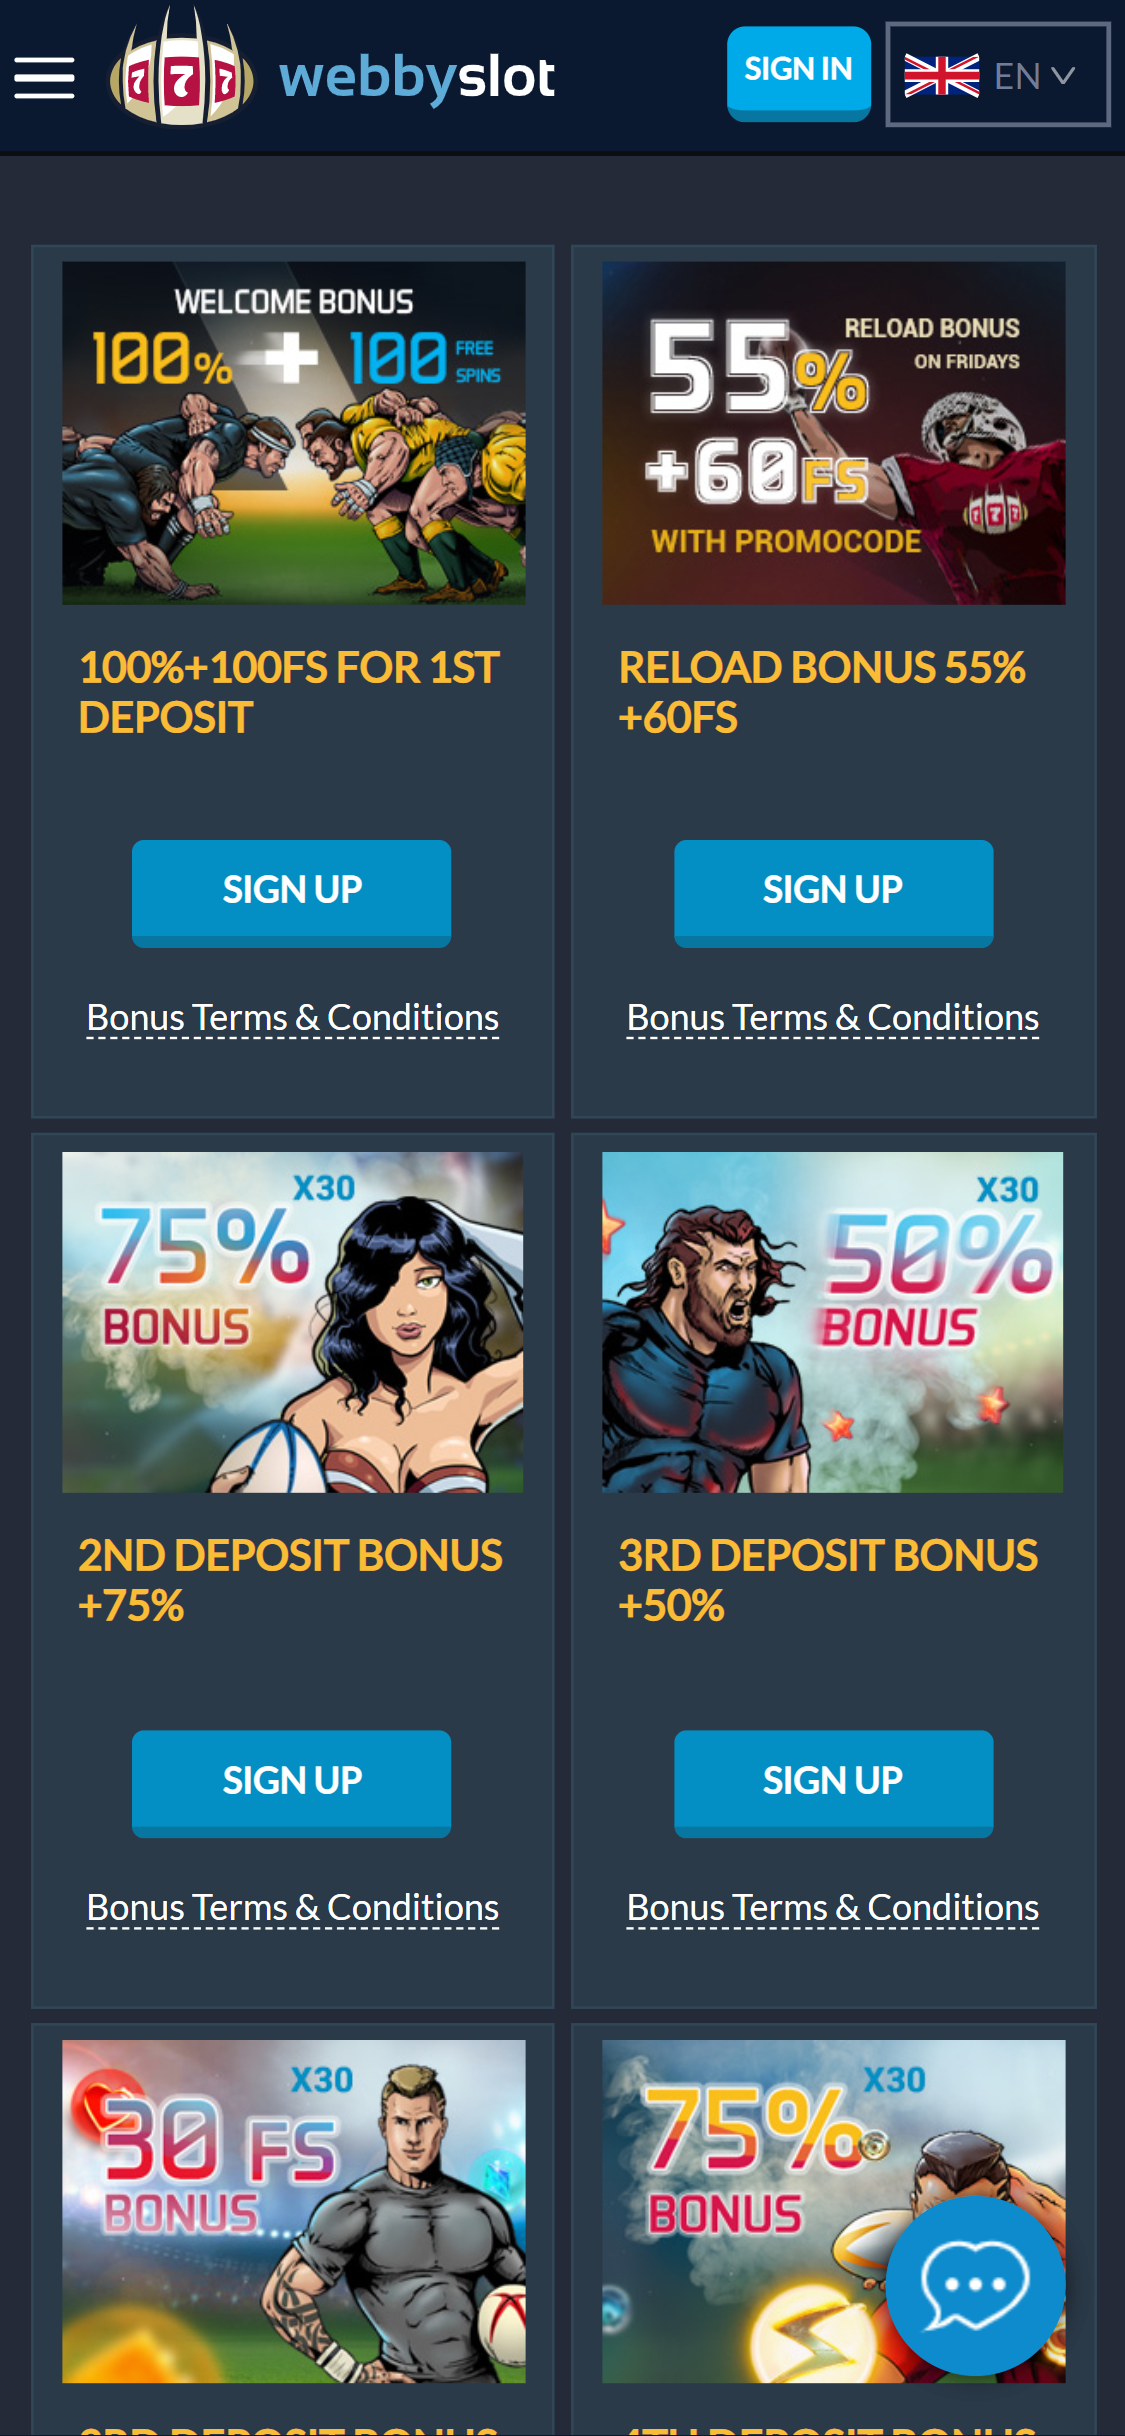 WebbySlot Casino Mobile No Deposit Bonus Review